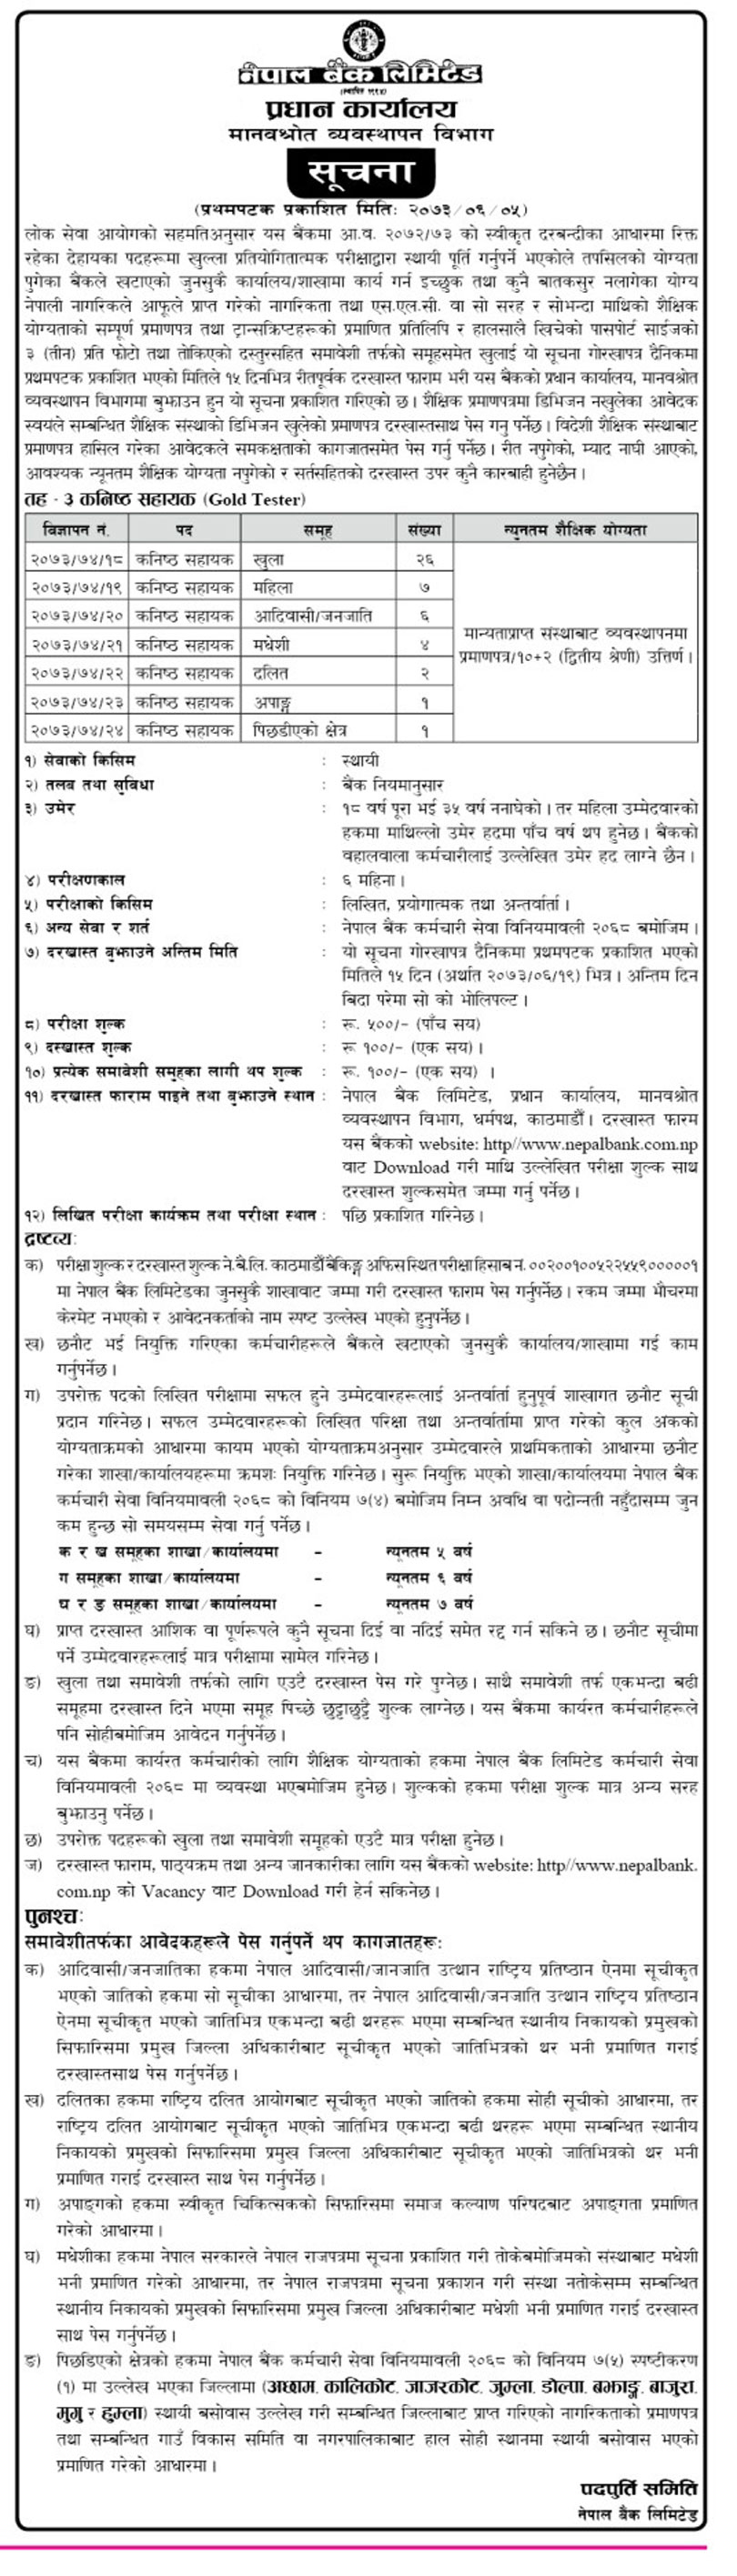 nepal-bank-vacancy